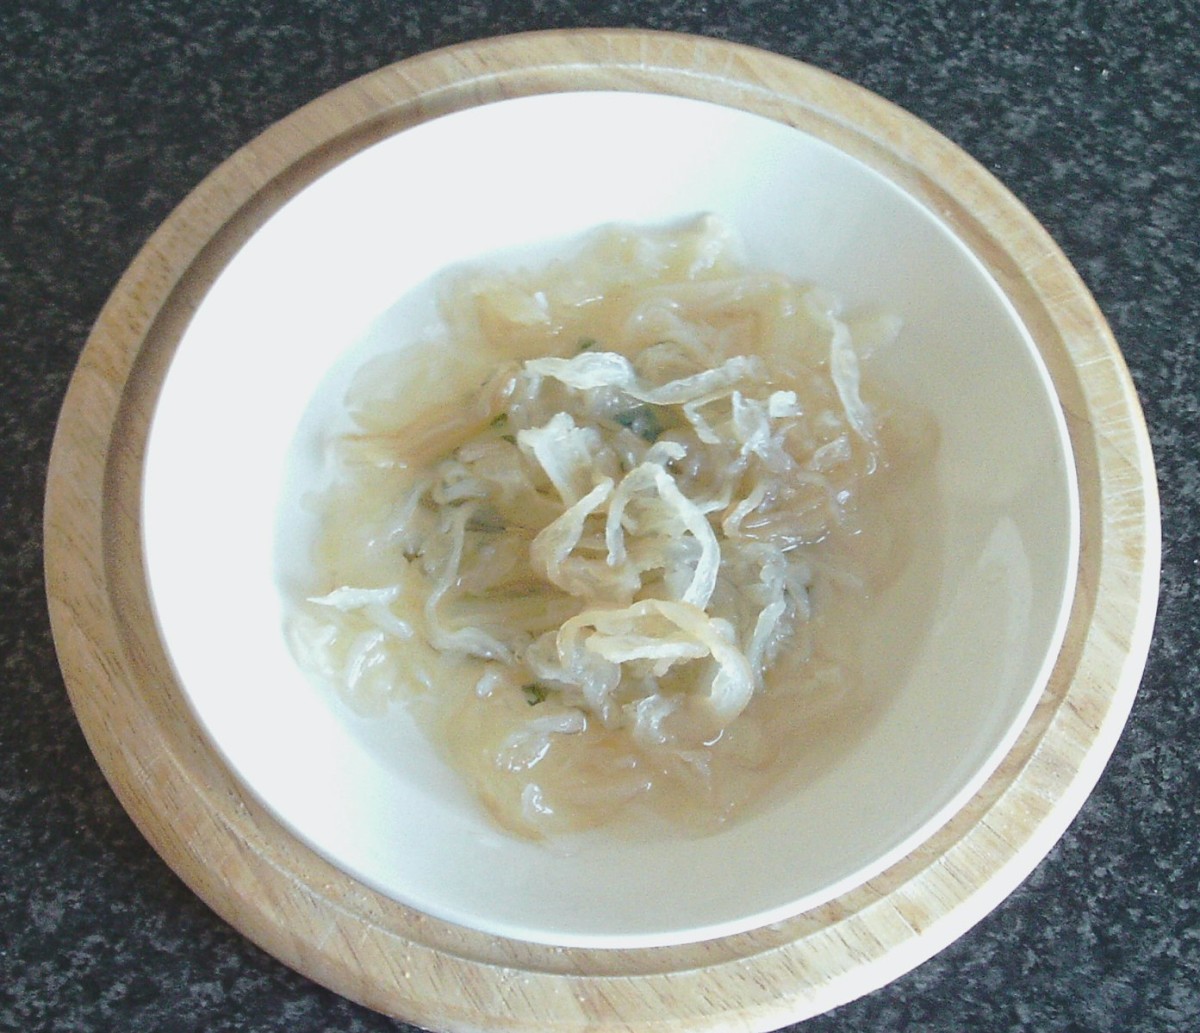 Jellyfish strips in brine